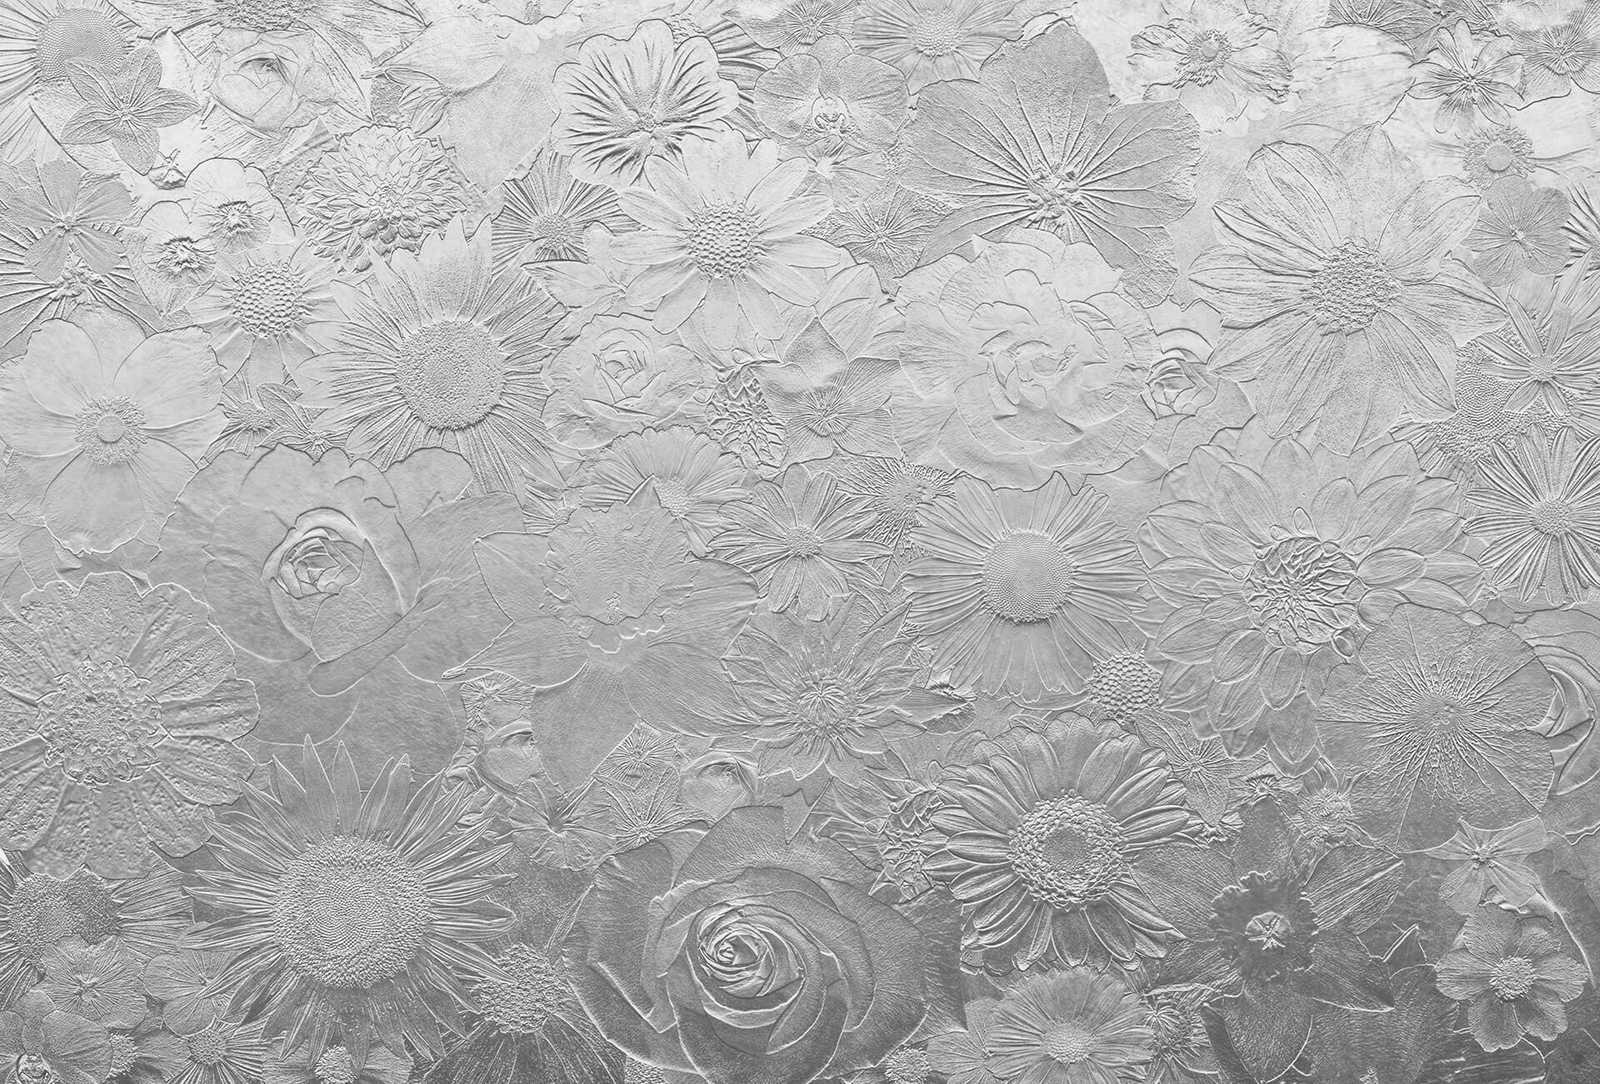 Fototapete silberne Blumen – Grau
